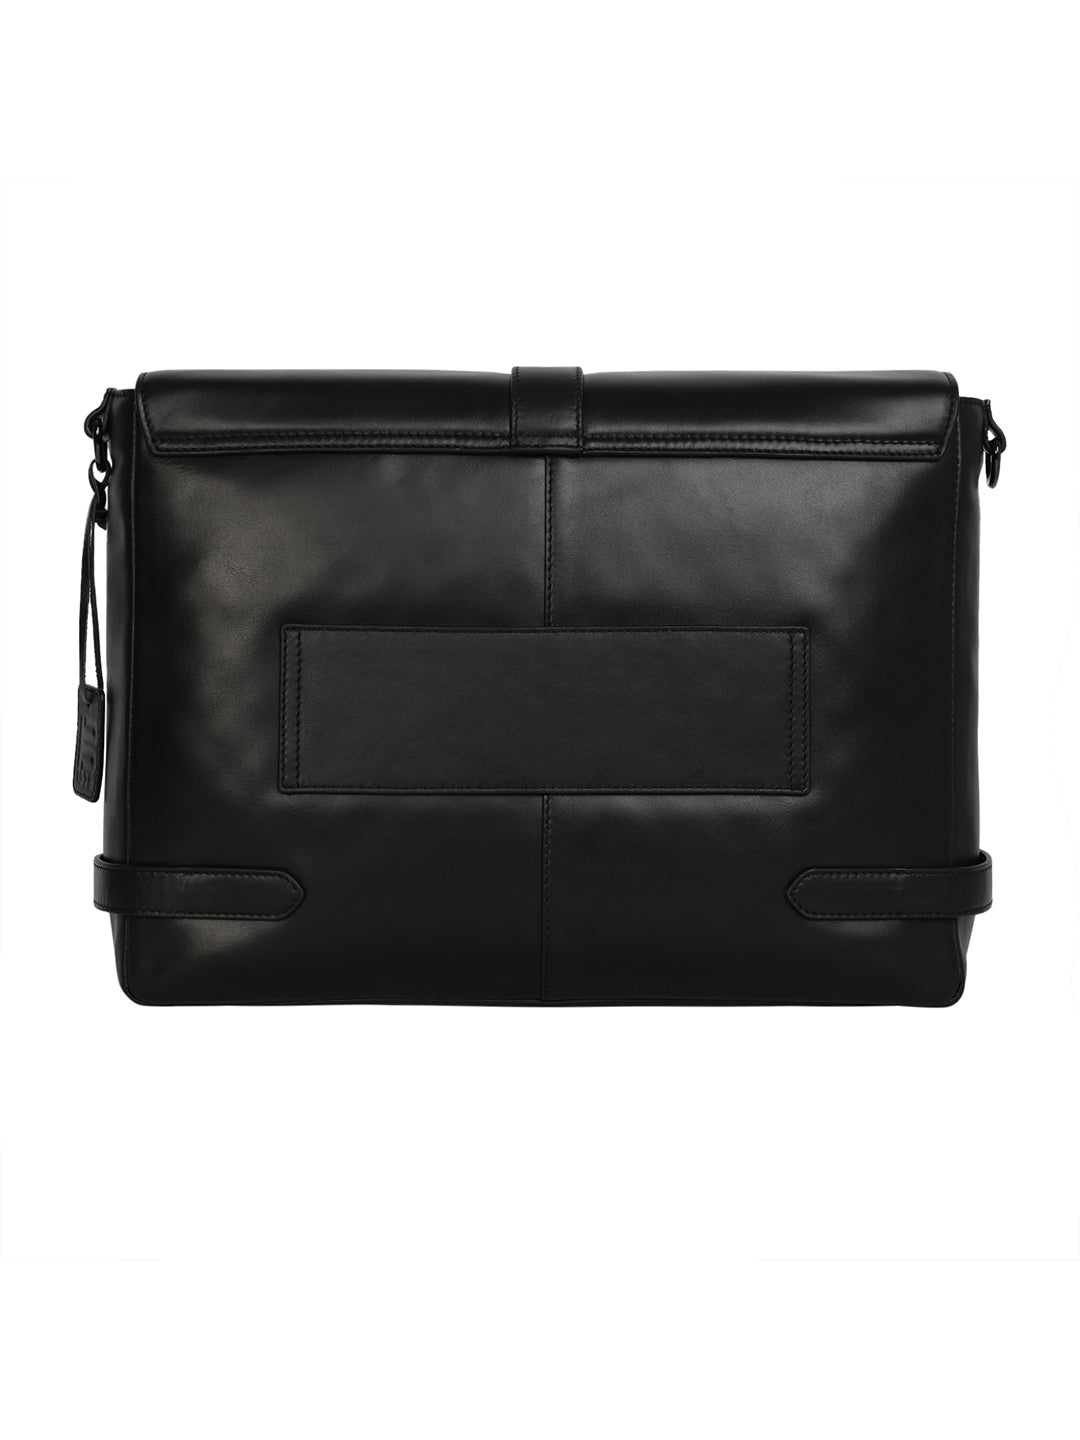 BAGATT Black Leather Messenger Bag